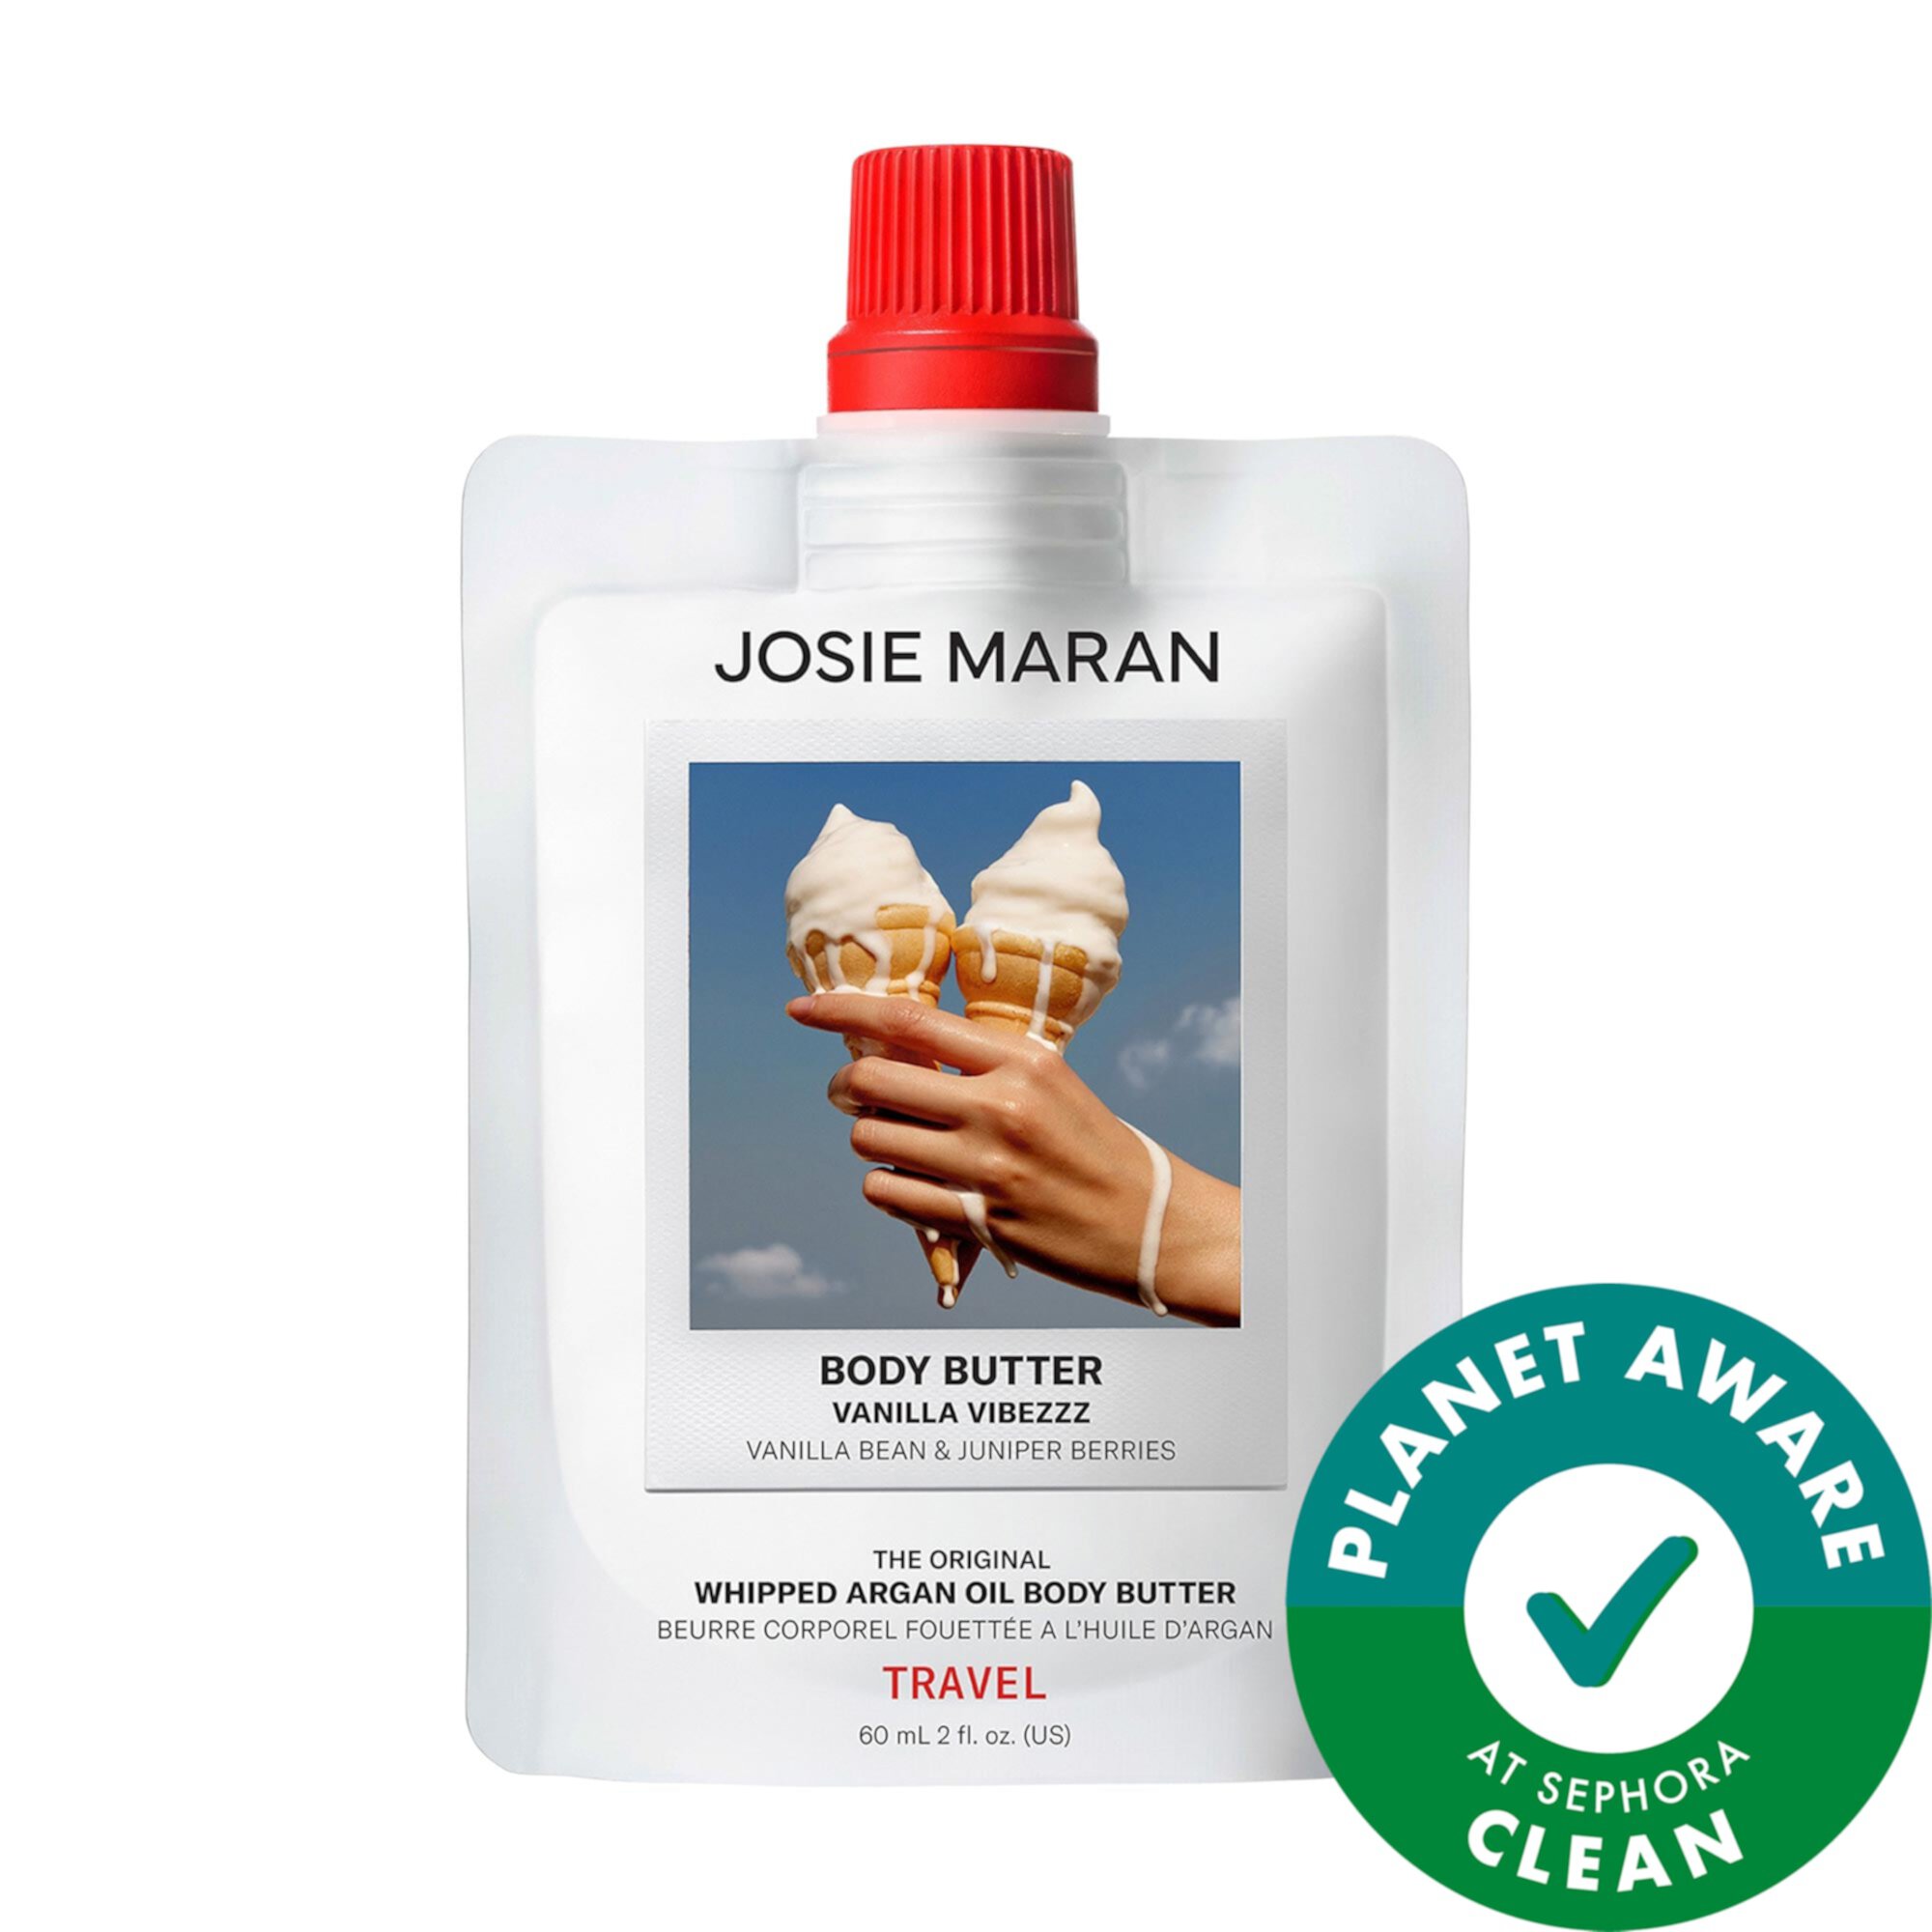 Mini Vanilla Vibezzz - Whipped Argan Oil Refillable Firming Body Butter Josie Maran